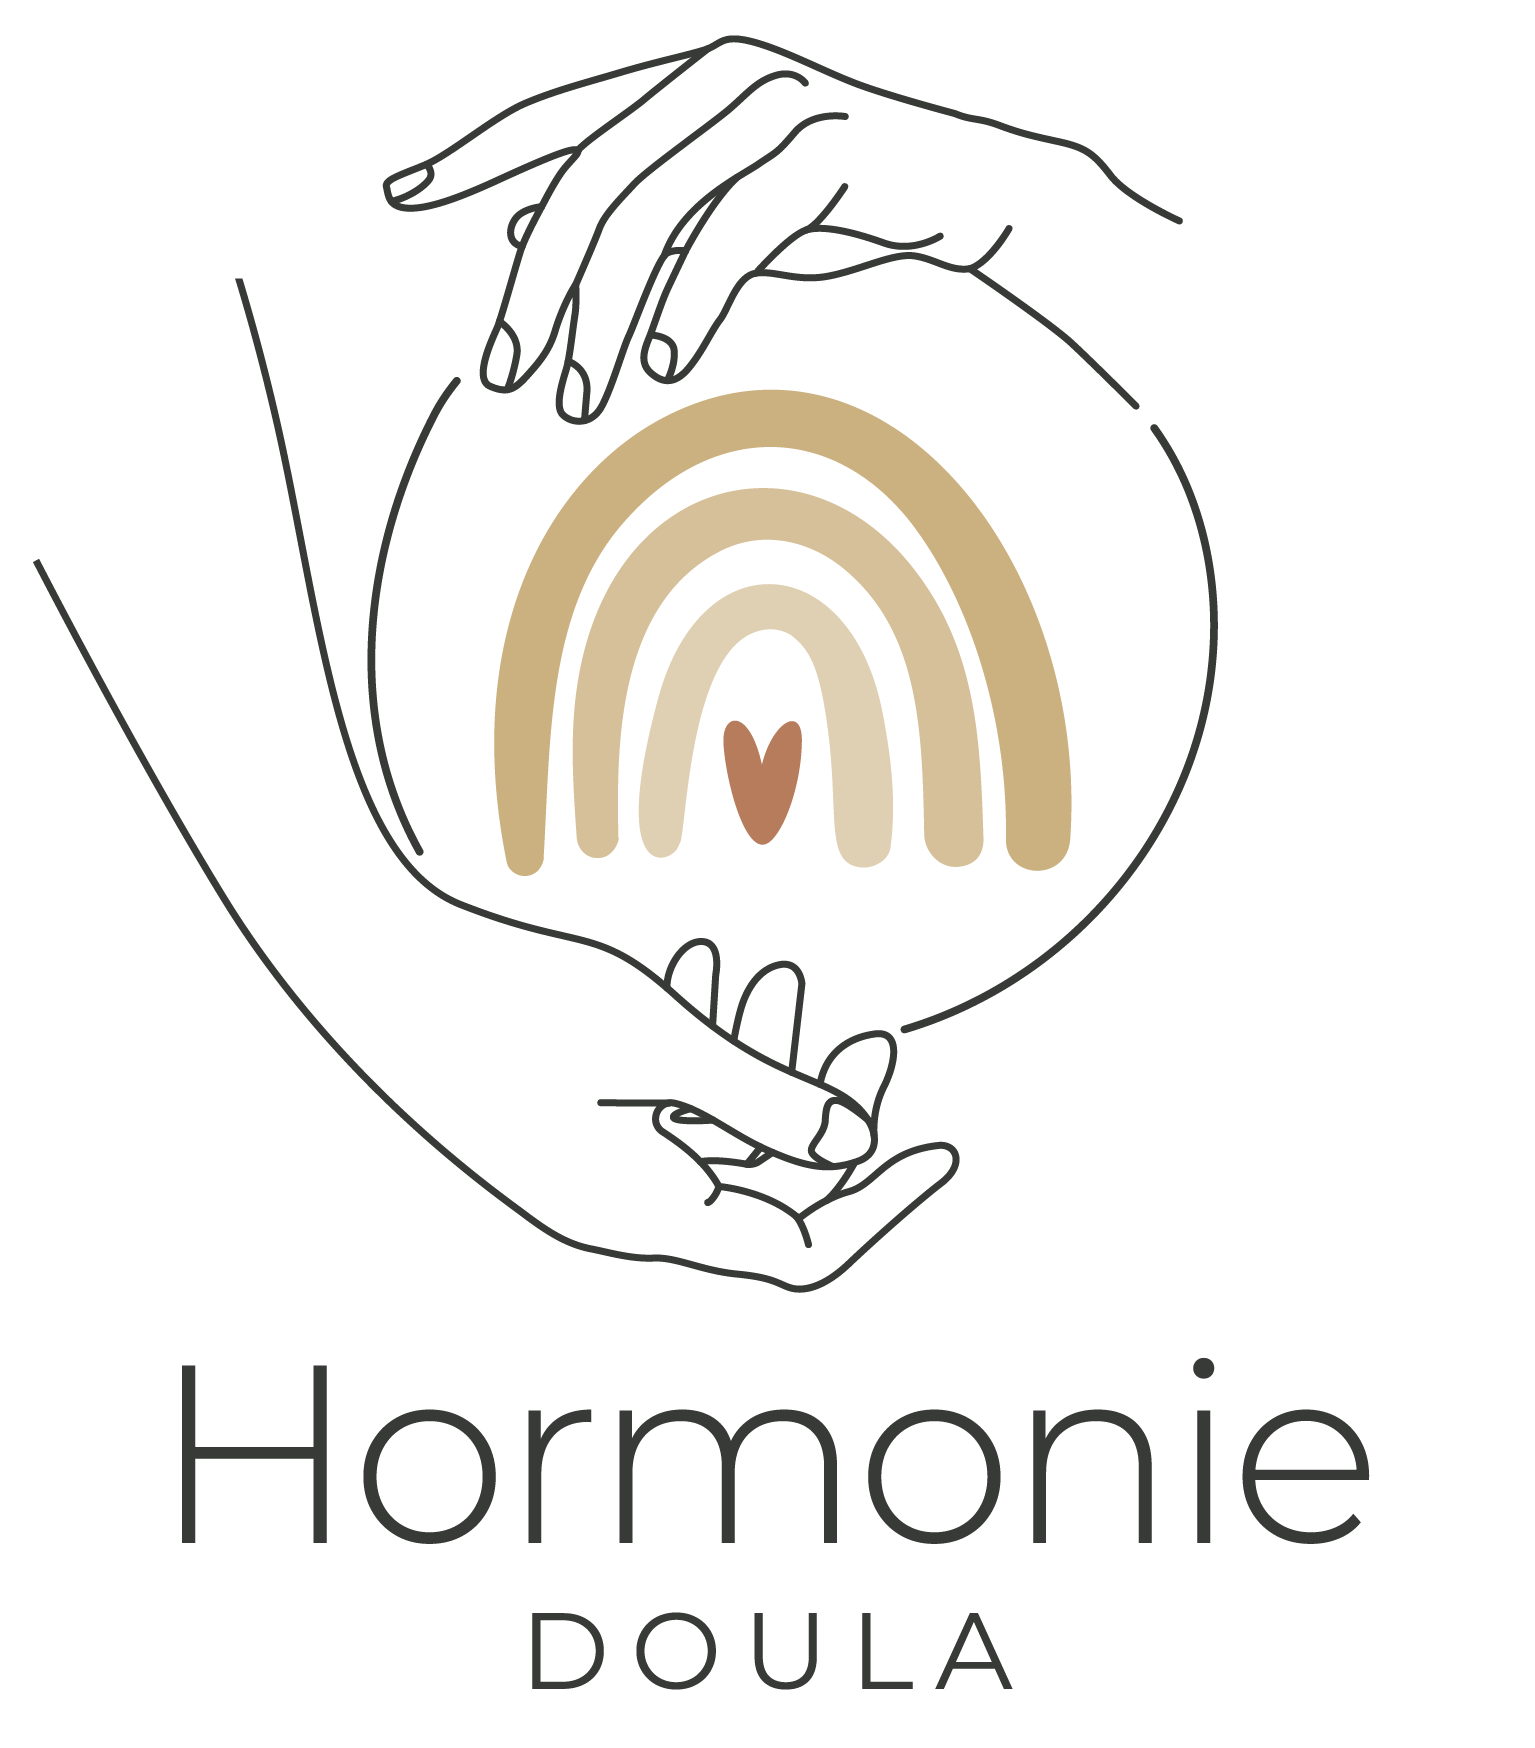 Hormonie by Lauralena